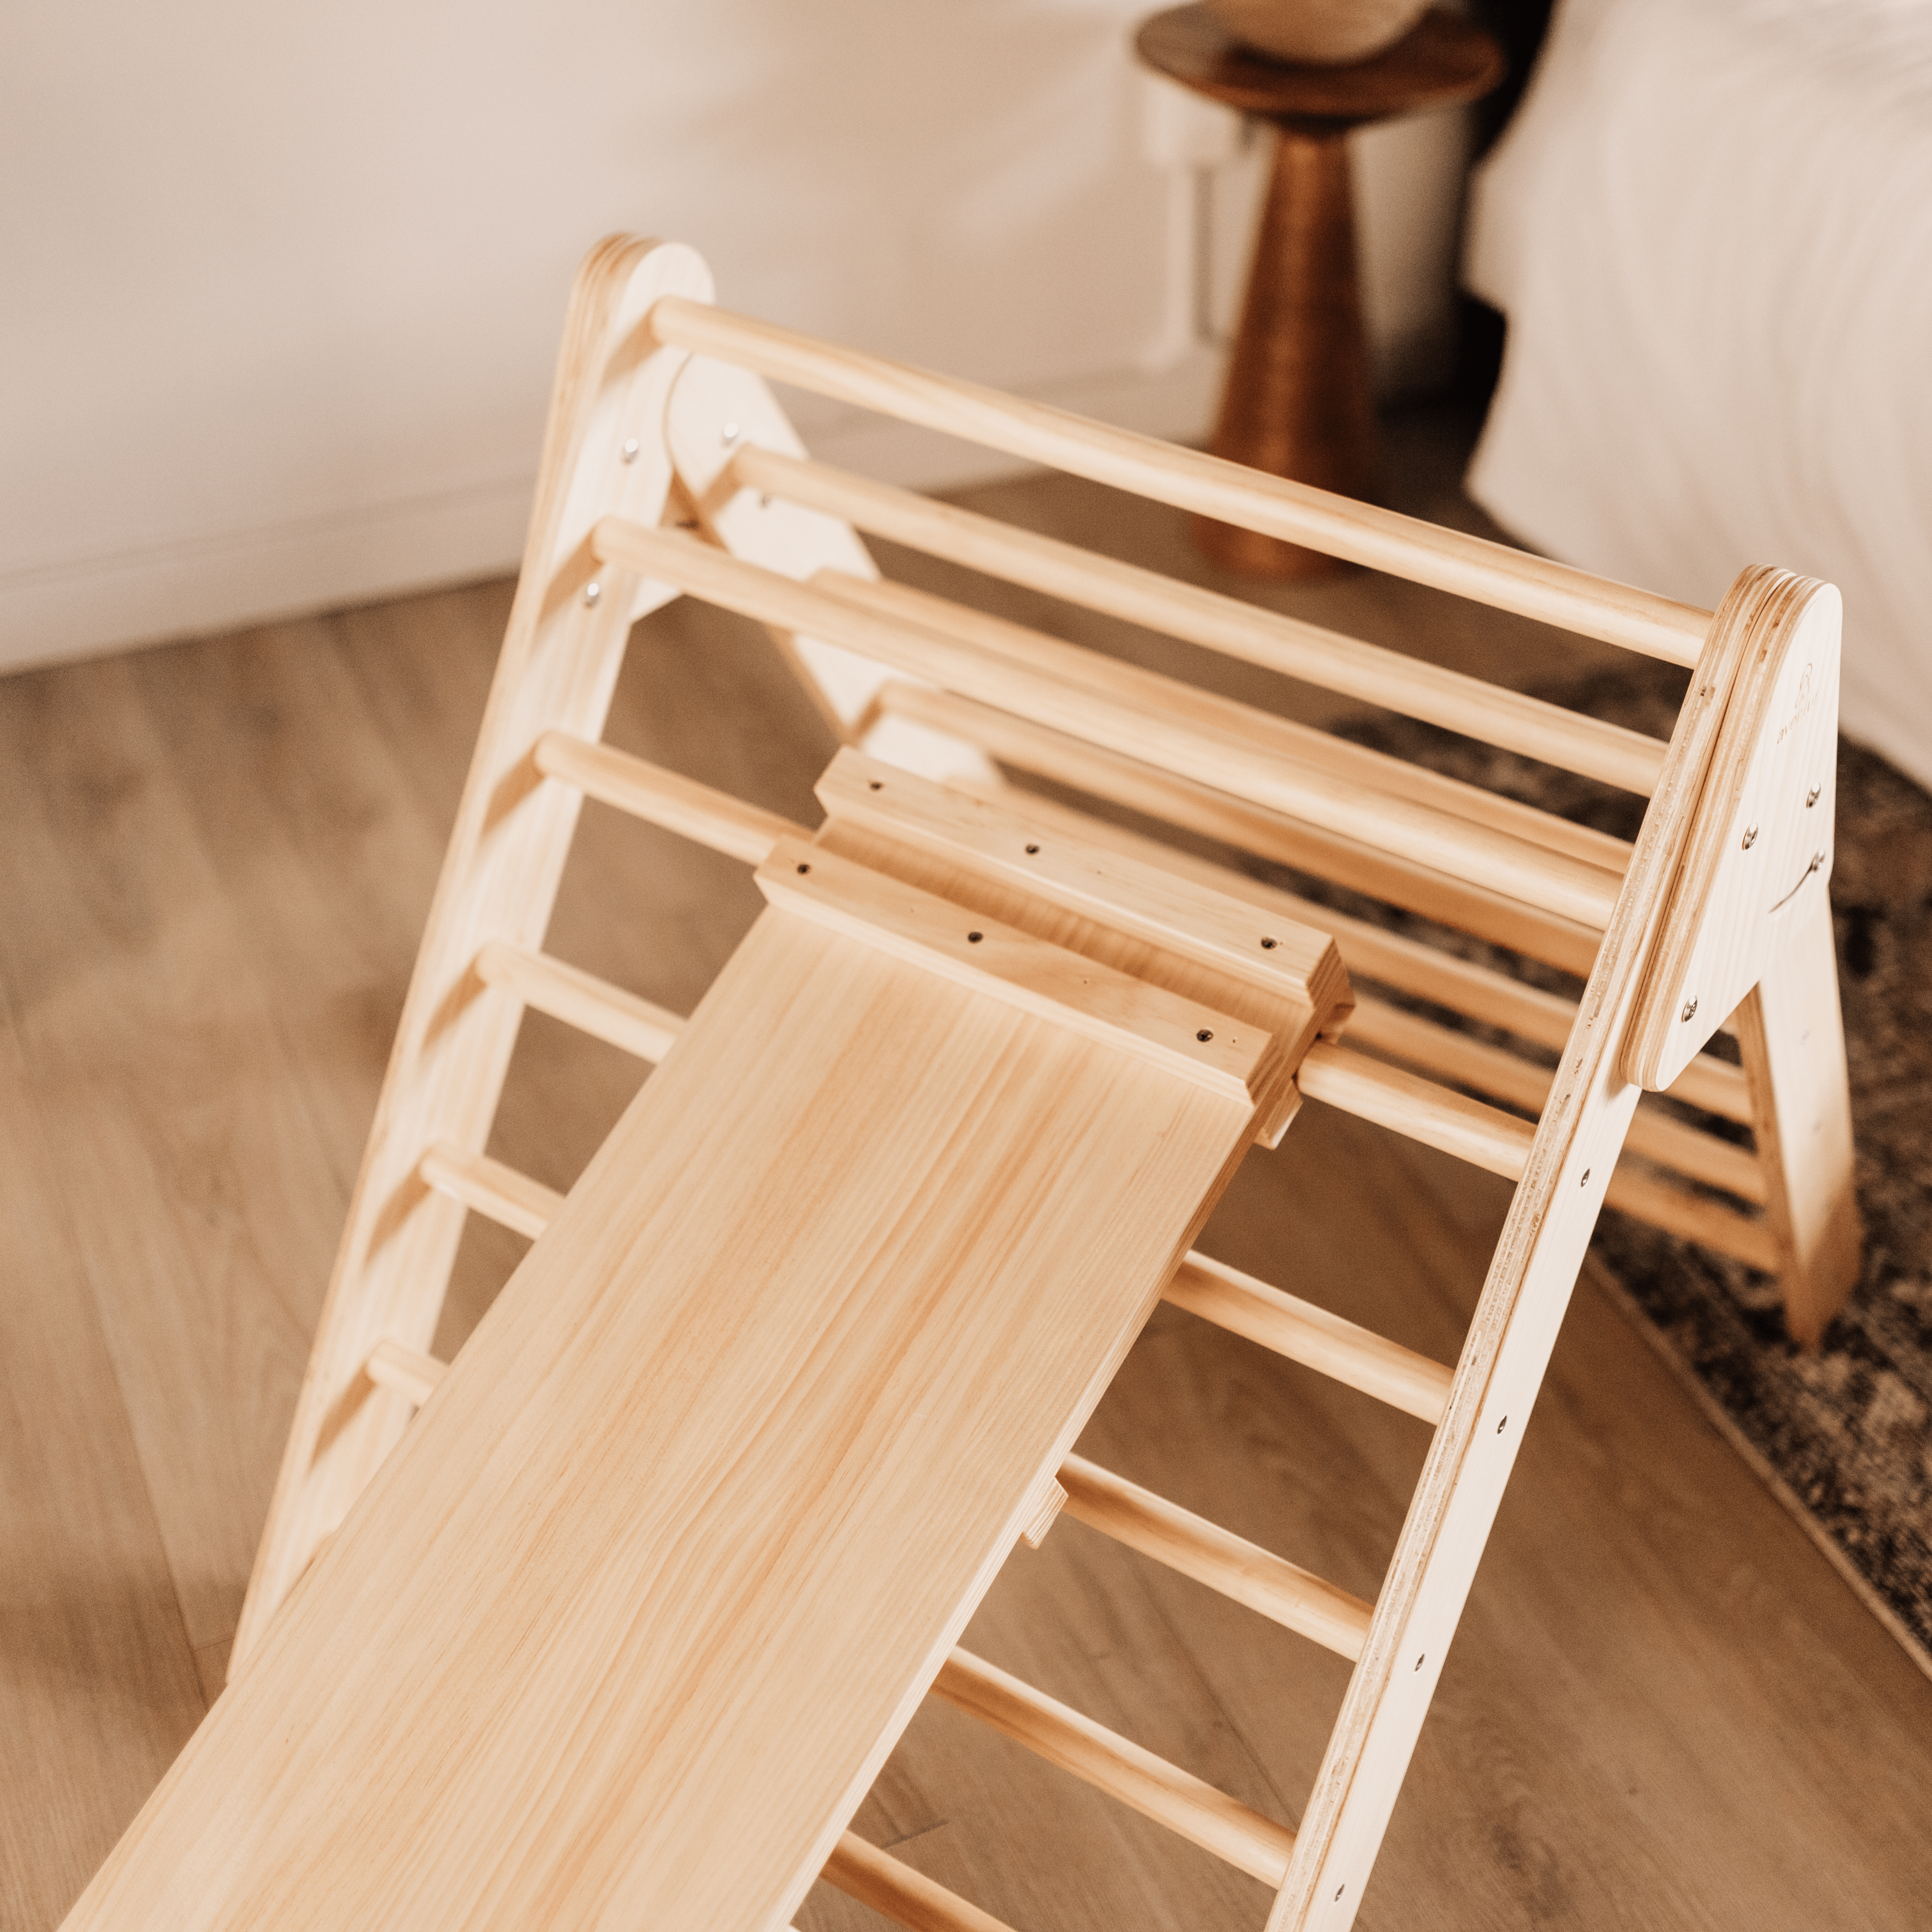 Olive- Pikler Triangle Ladder and Climber Slide - Multiple Sizes